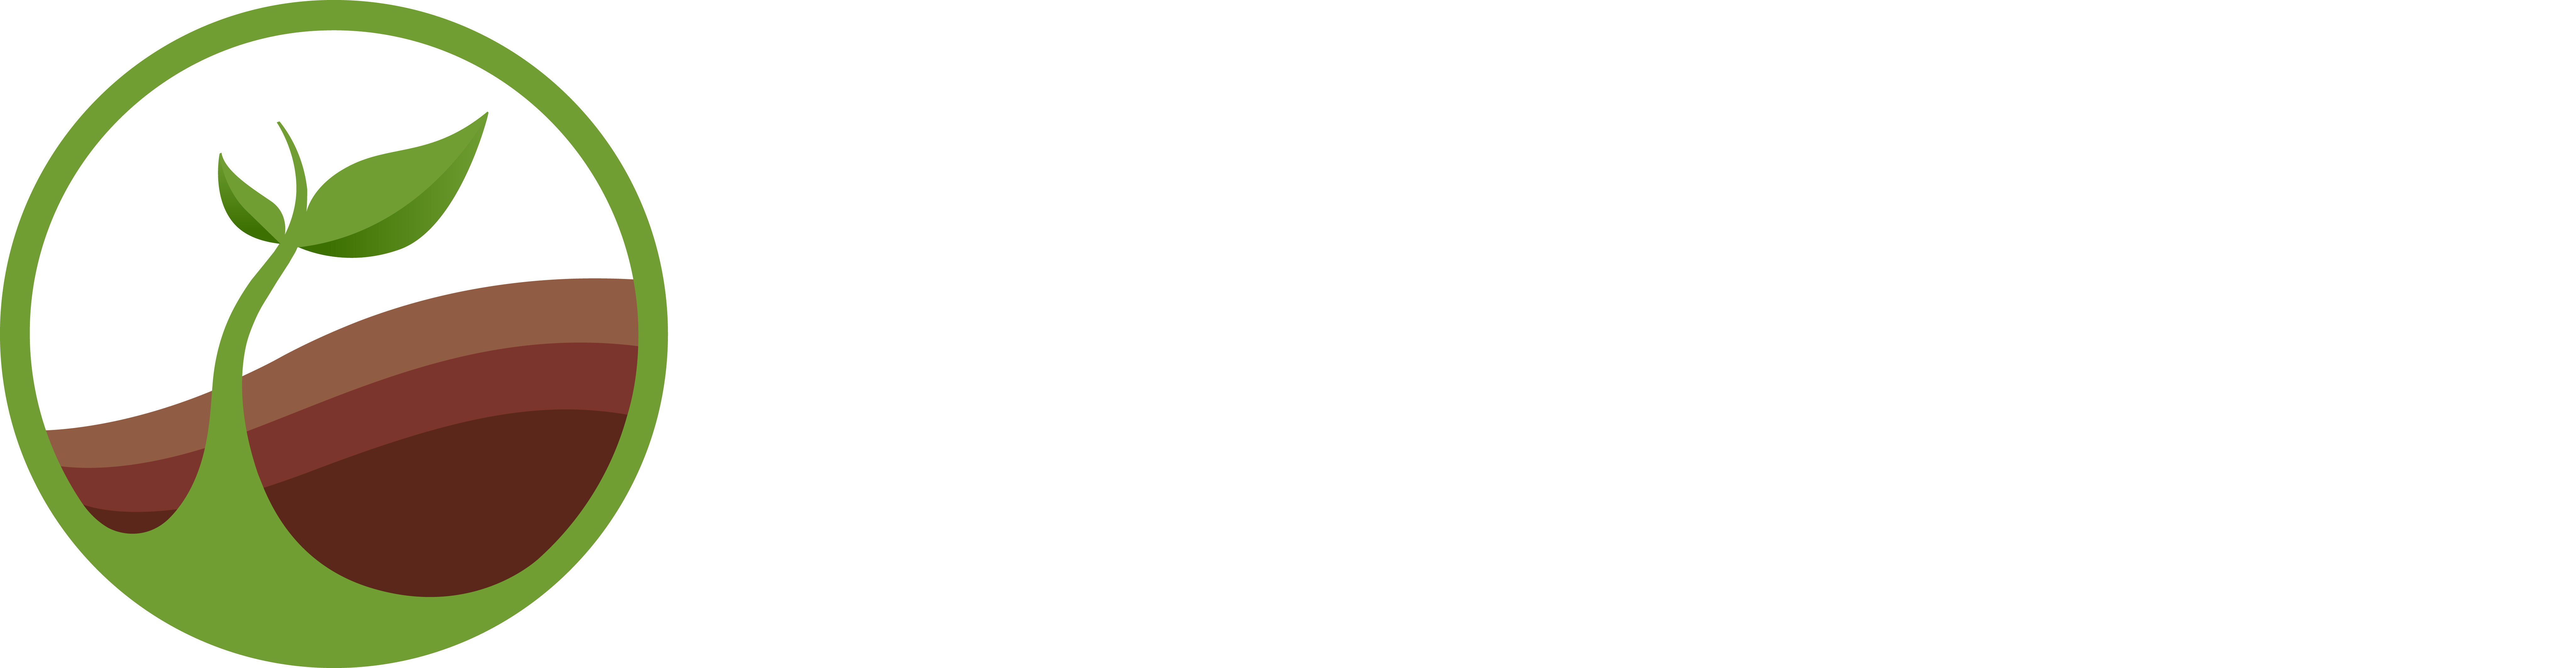 Farmers Business Network Logo